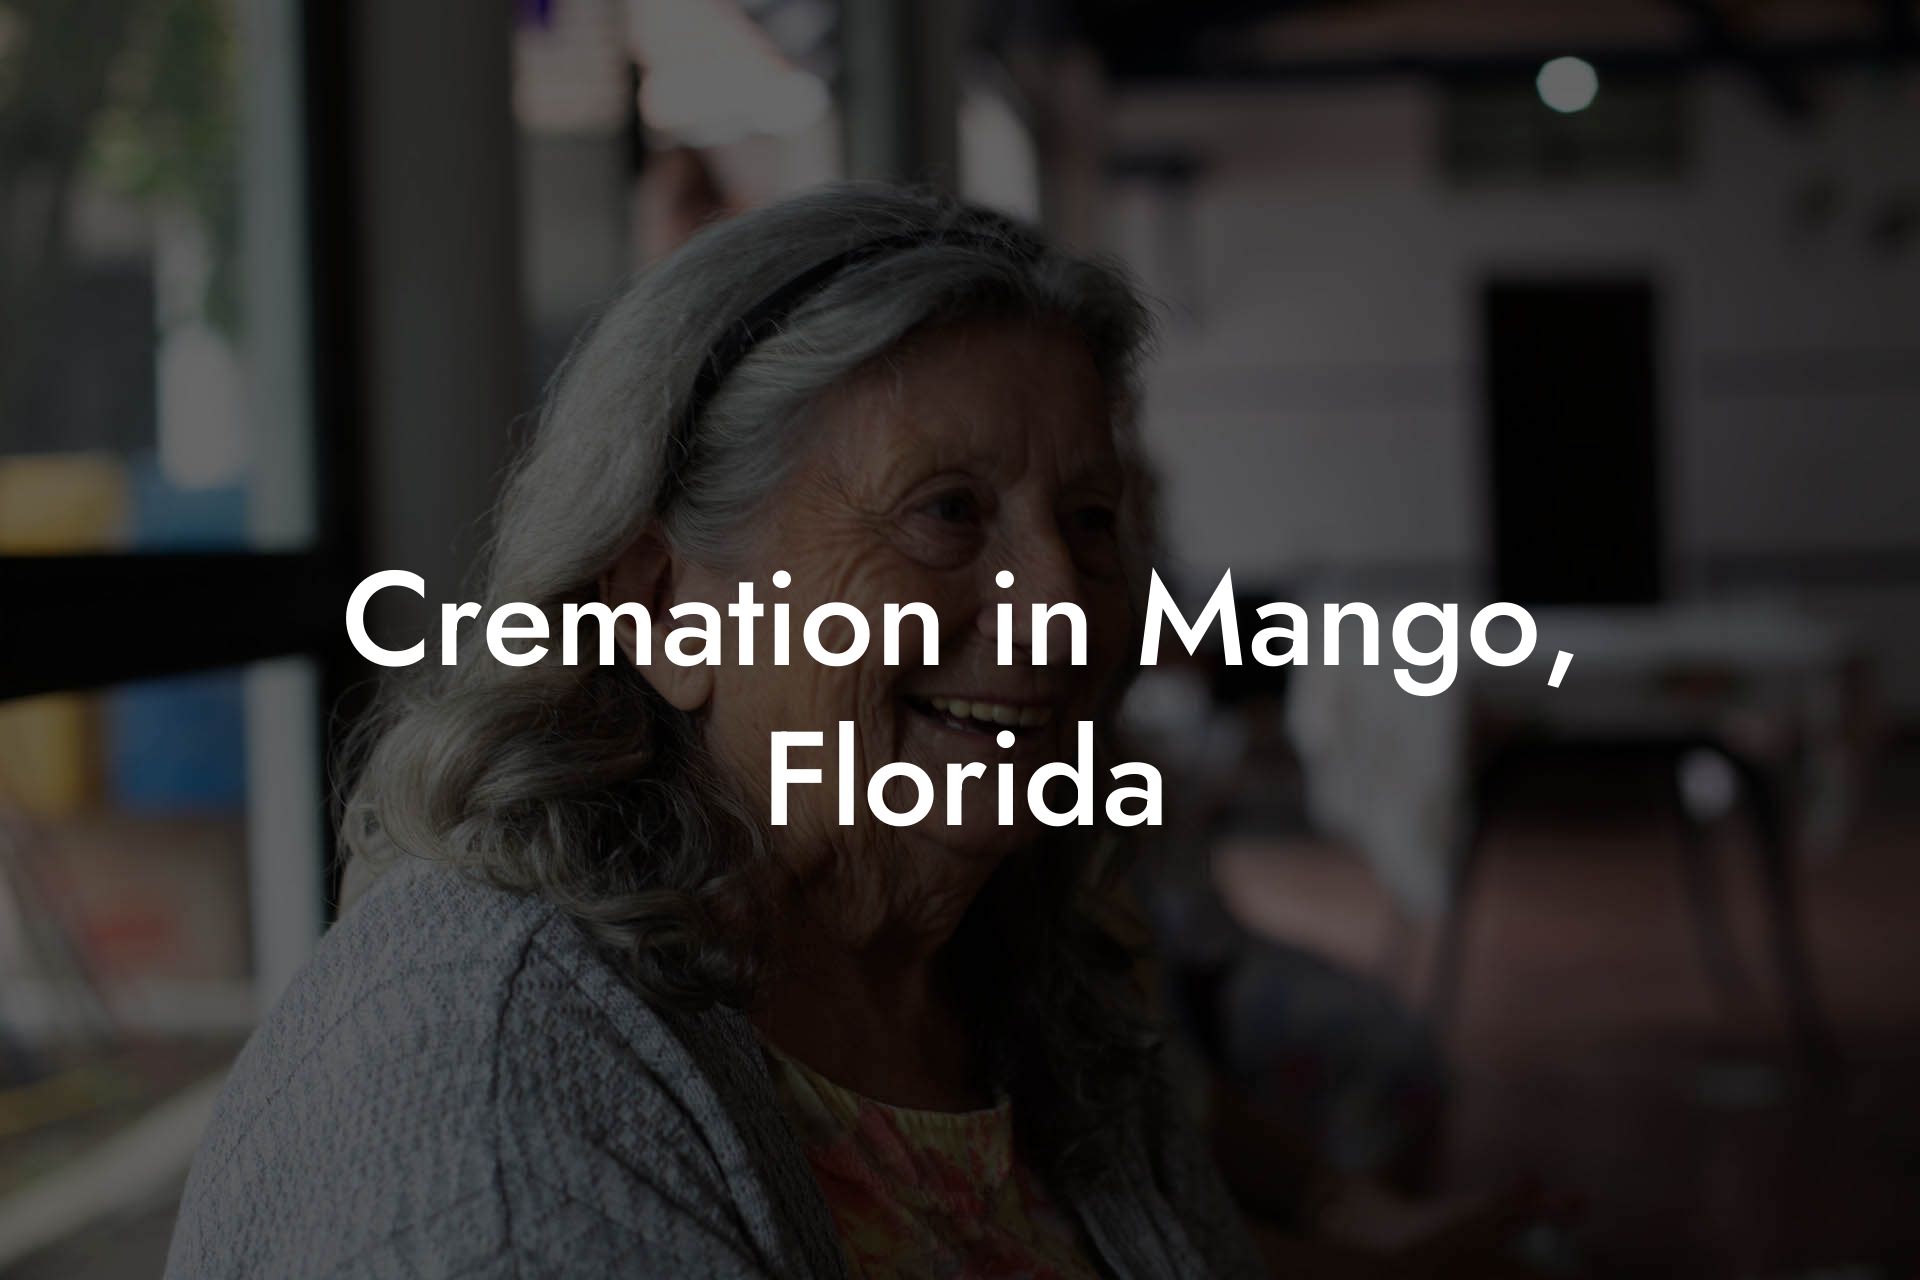 Cremation in Mango, Florida